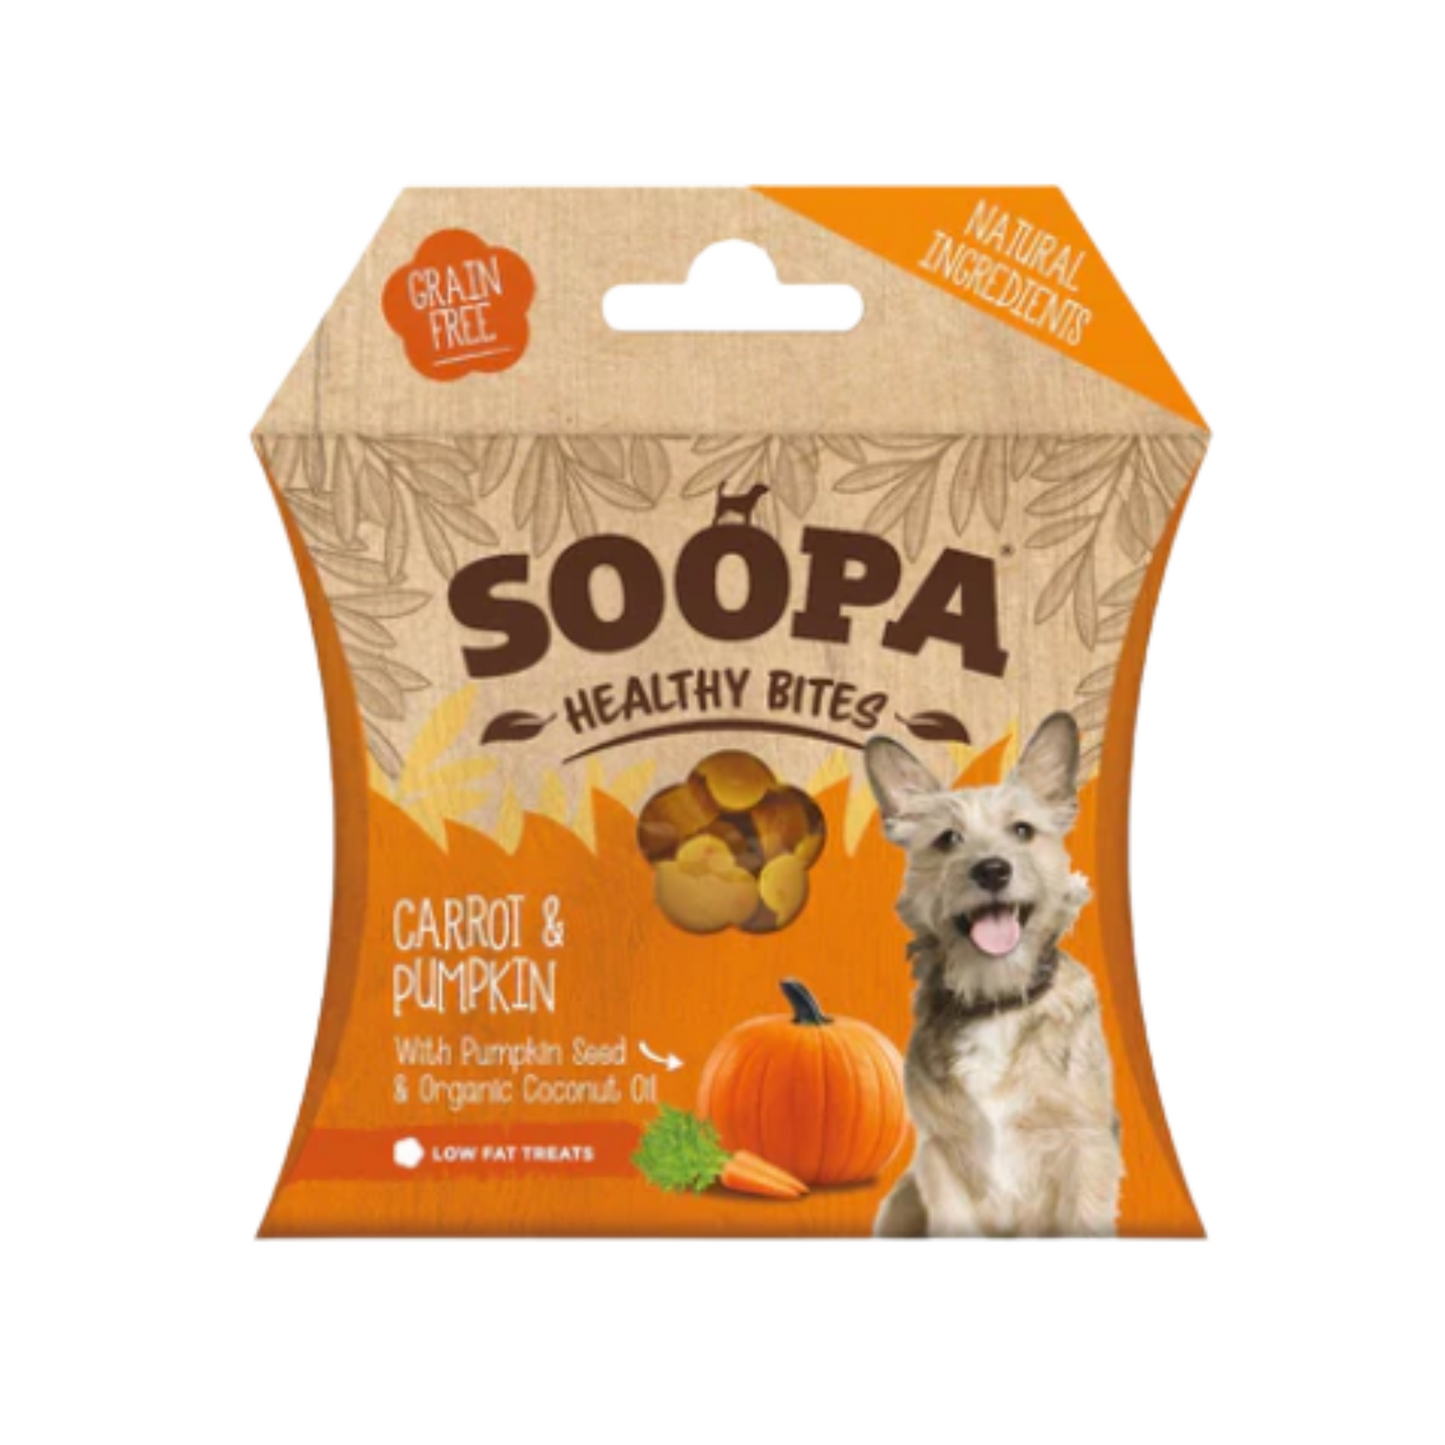 Soopa Carrot & Pumpkin Healthy Bites Dog Treats 50g